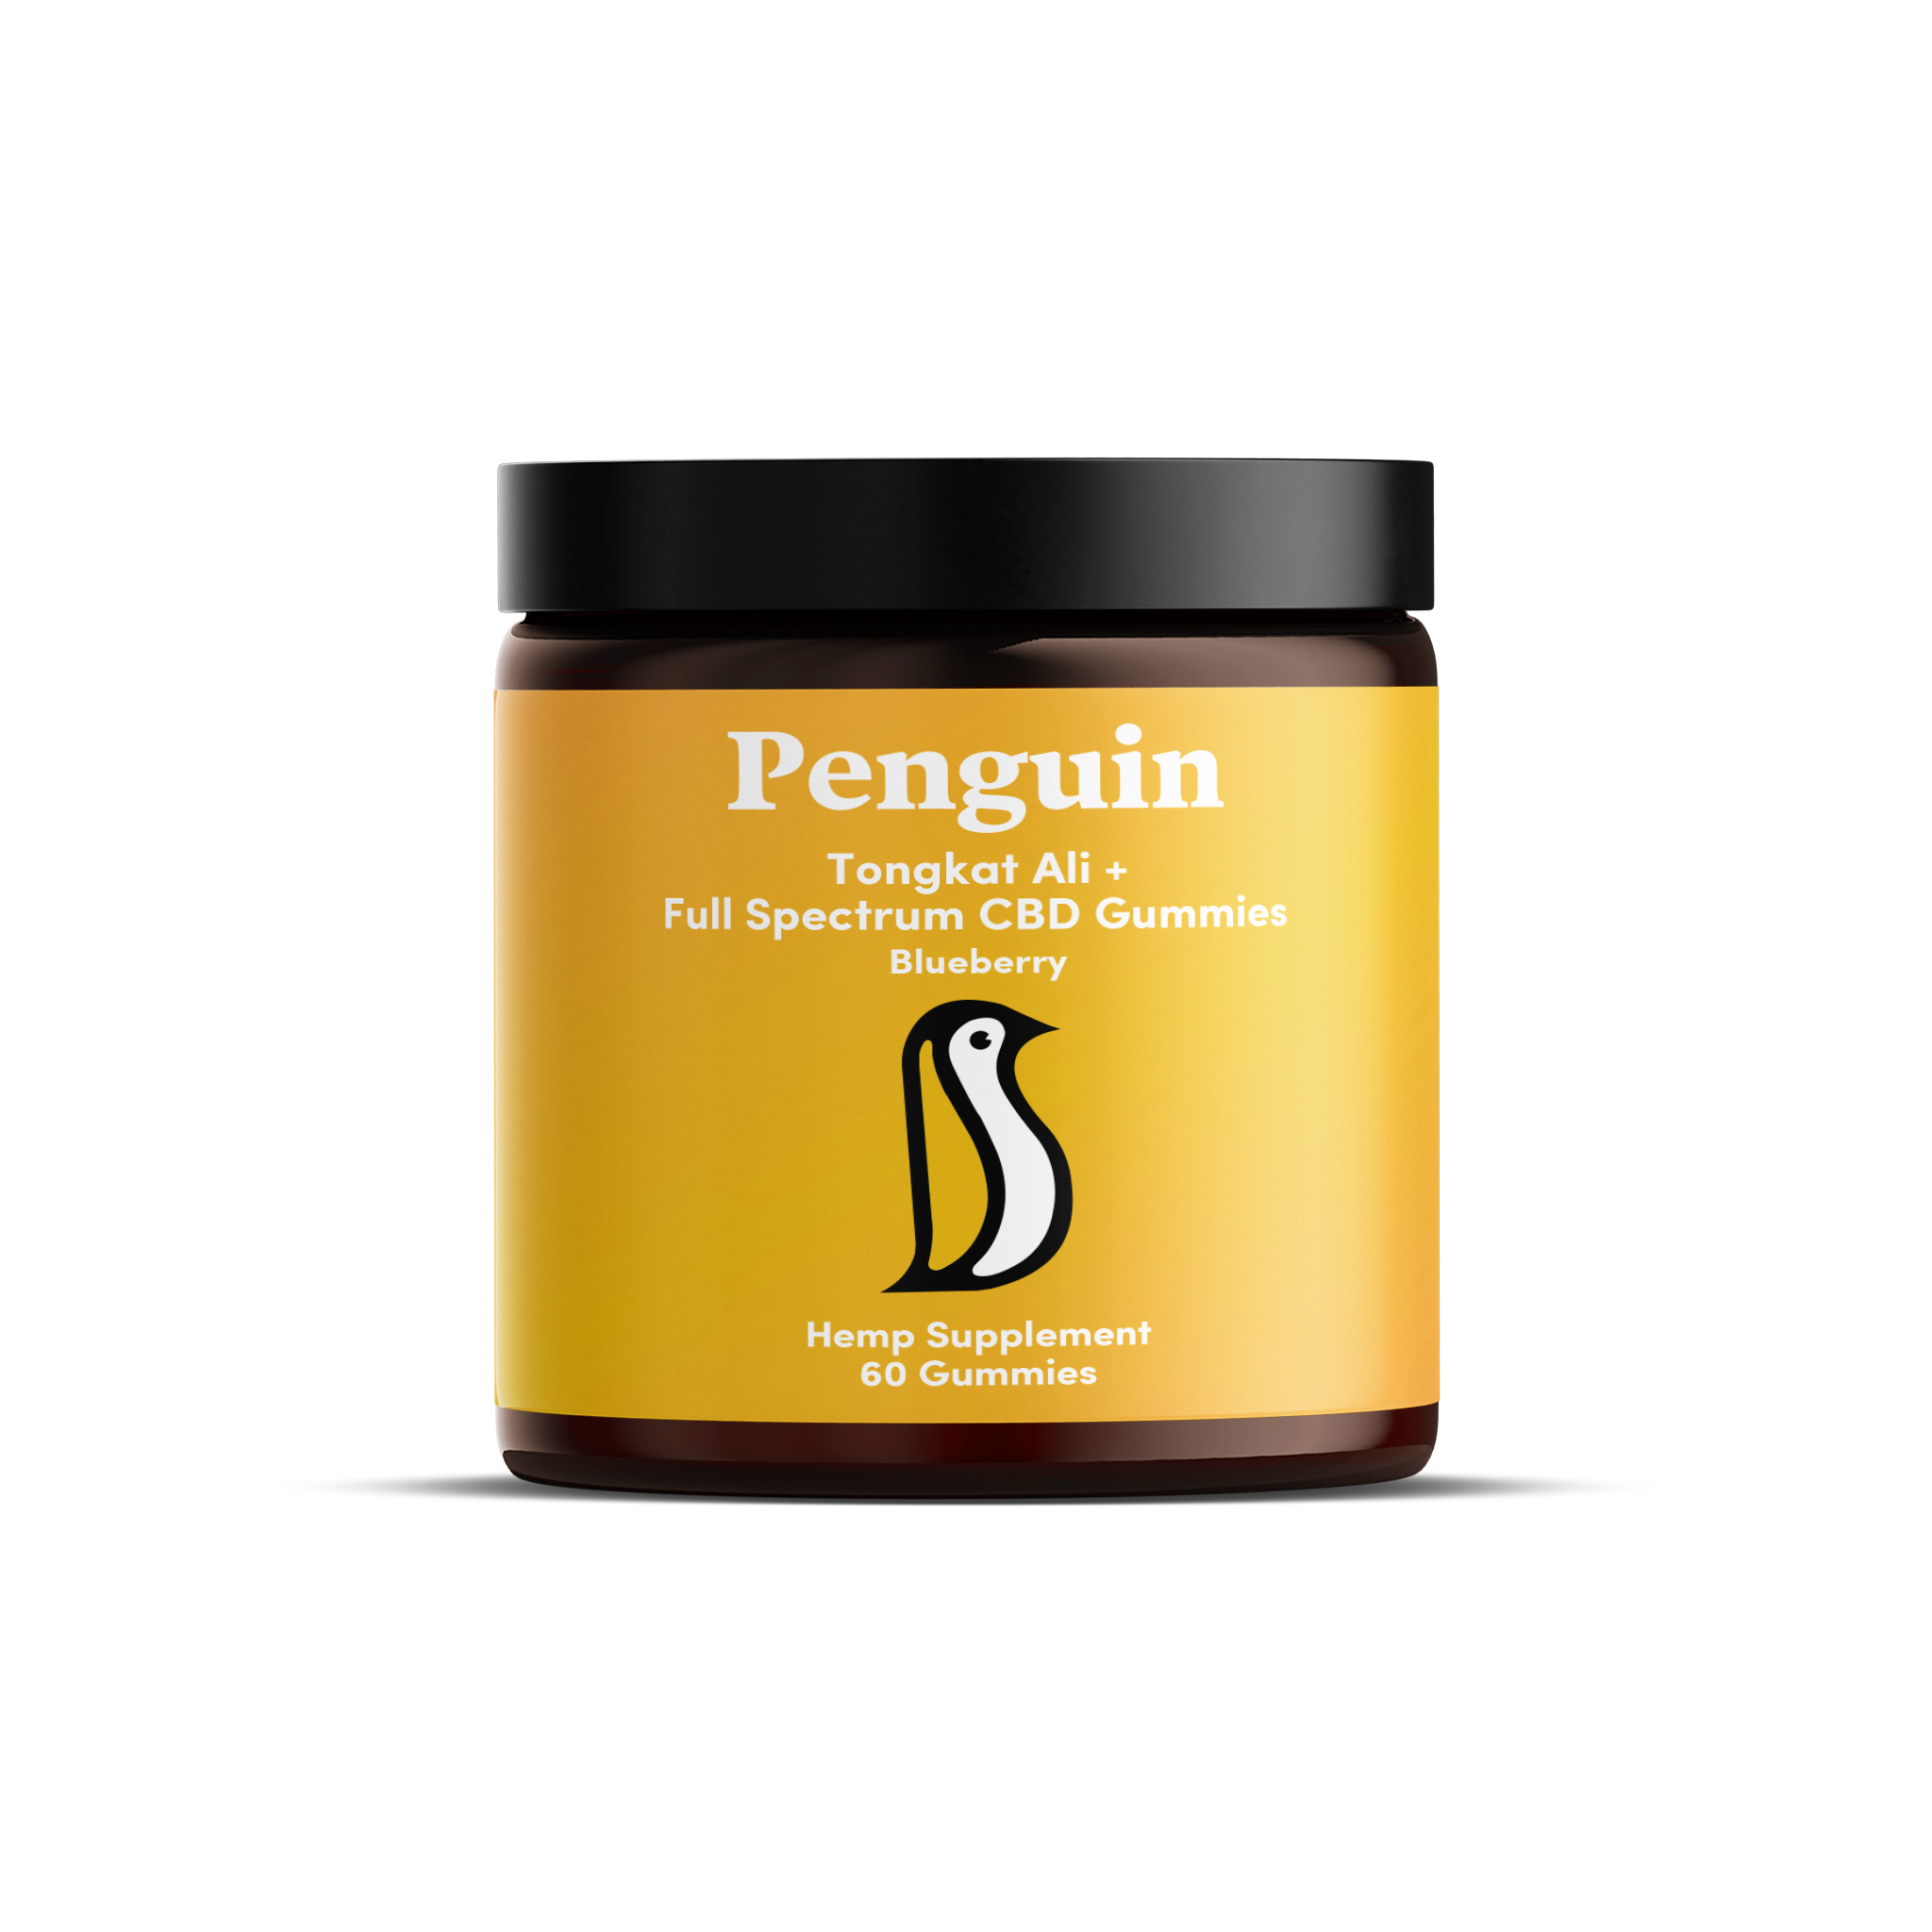 Penguin CBD Gumdrops Best Price